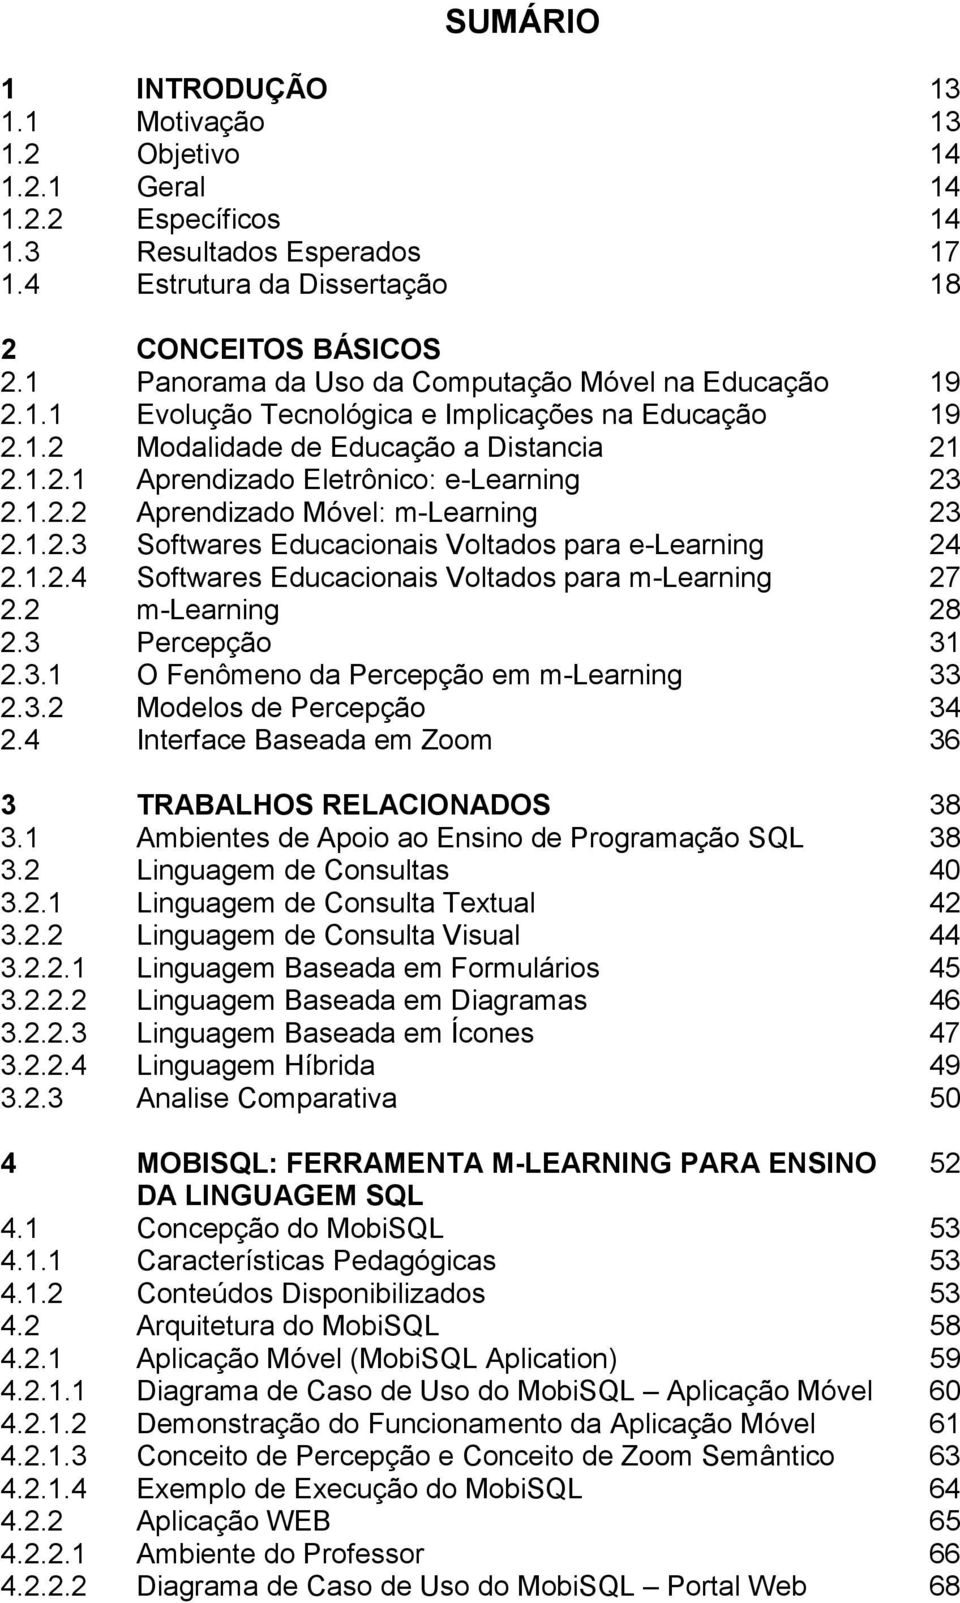 1.2.2 Aprendizado Móvel: m-learning 23 2.1.2.3 Softwares Educacionais Voltados para e-learning 24 2.1.2.4 Softwares Educacionais Voltados para m-learning 27 2.2 m-learning 28 2.3 Percepção 31 2.3.1 O Fenômeno da Percepção em m-learning 33 2.